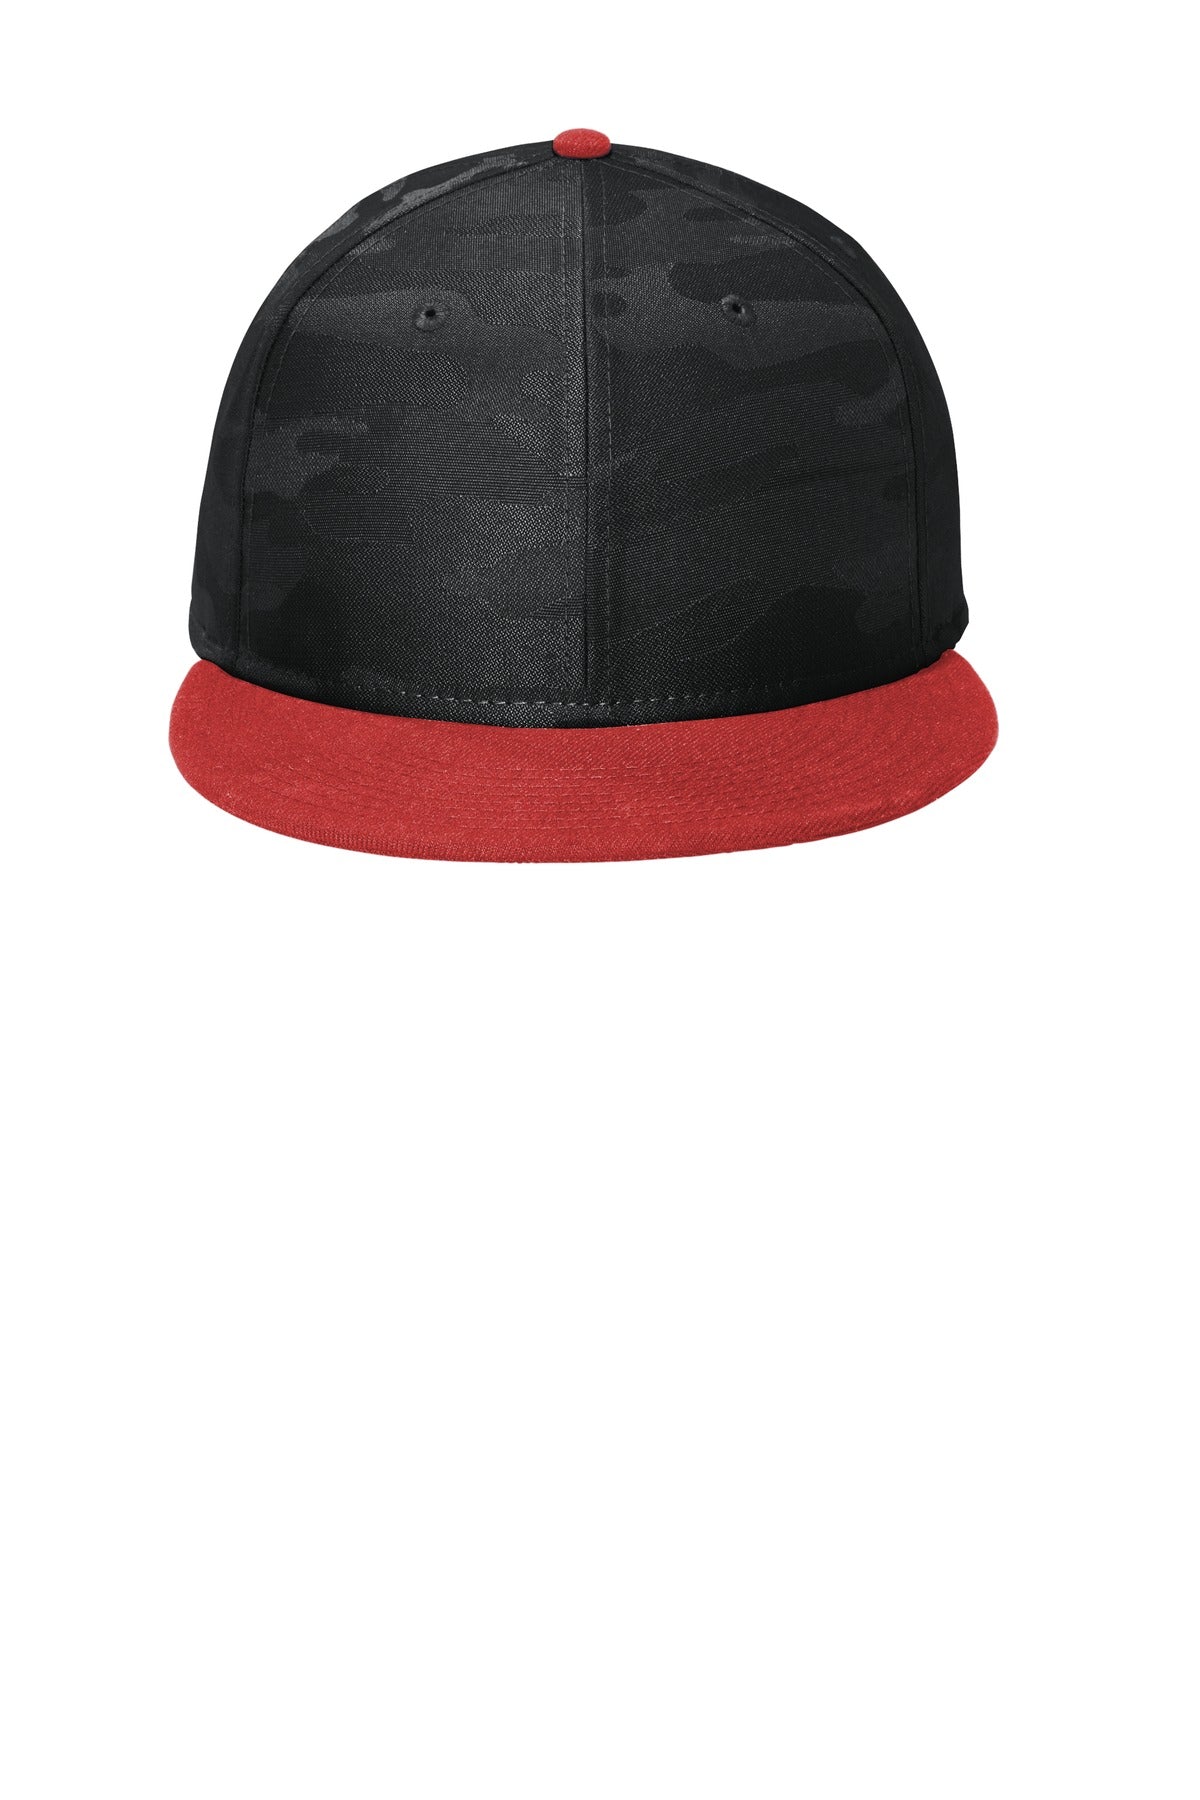 Caps Scarlet/ Black Camo OSFA New Era